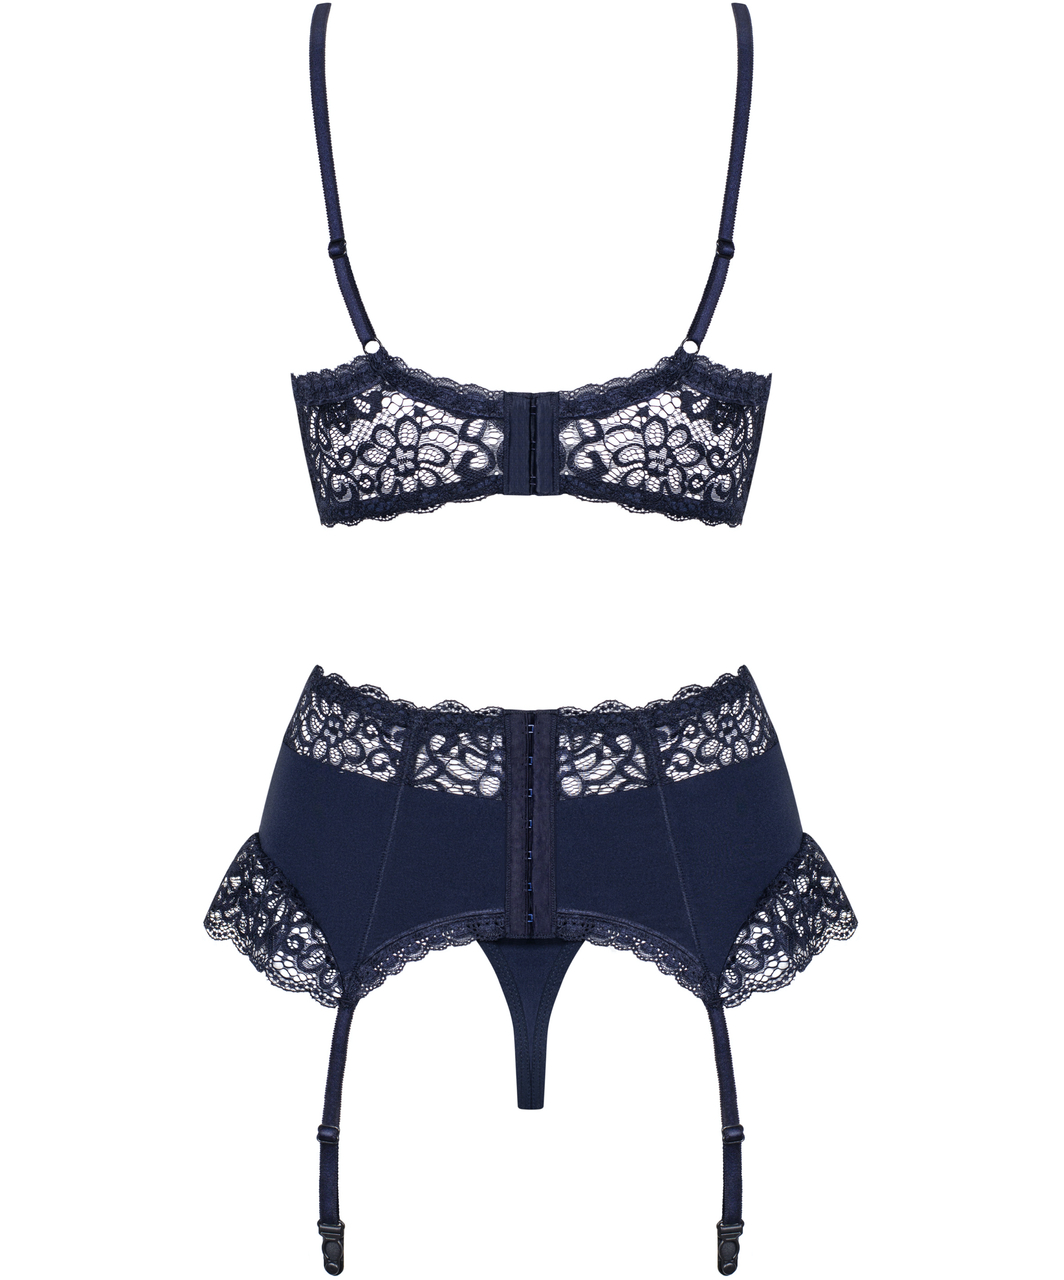 Obsessive dark blue lace lingerie set